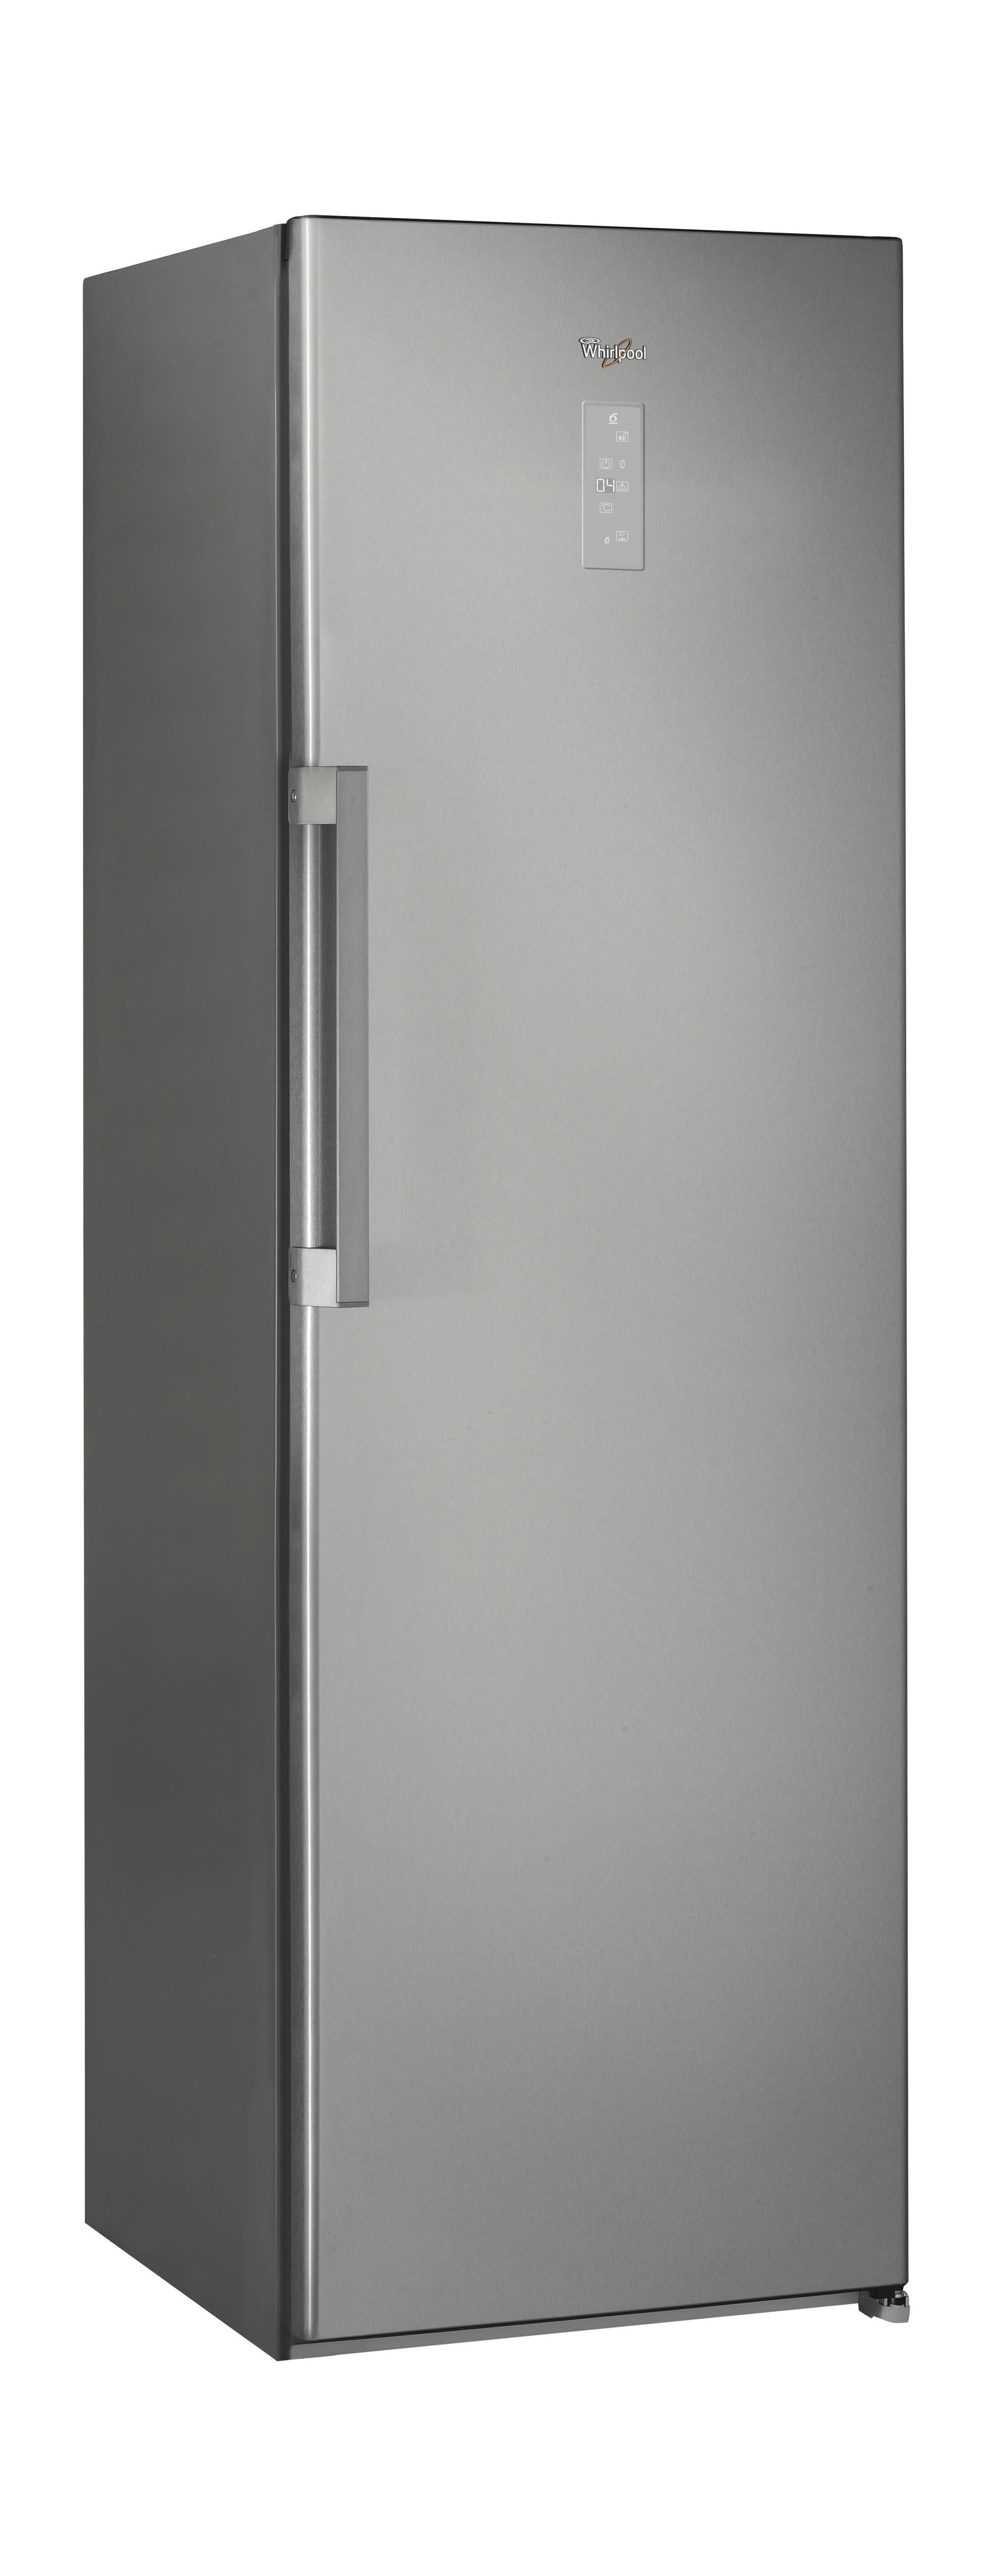 Whirlpool 10 CFT Upright Freezer + Whirlpool 13-CFT Single Door Refrigerator